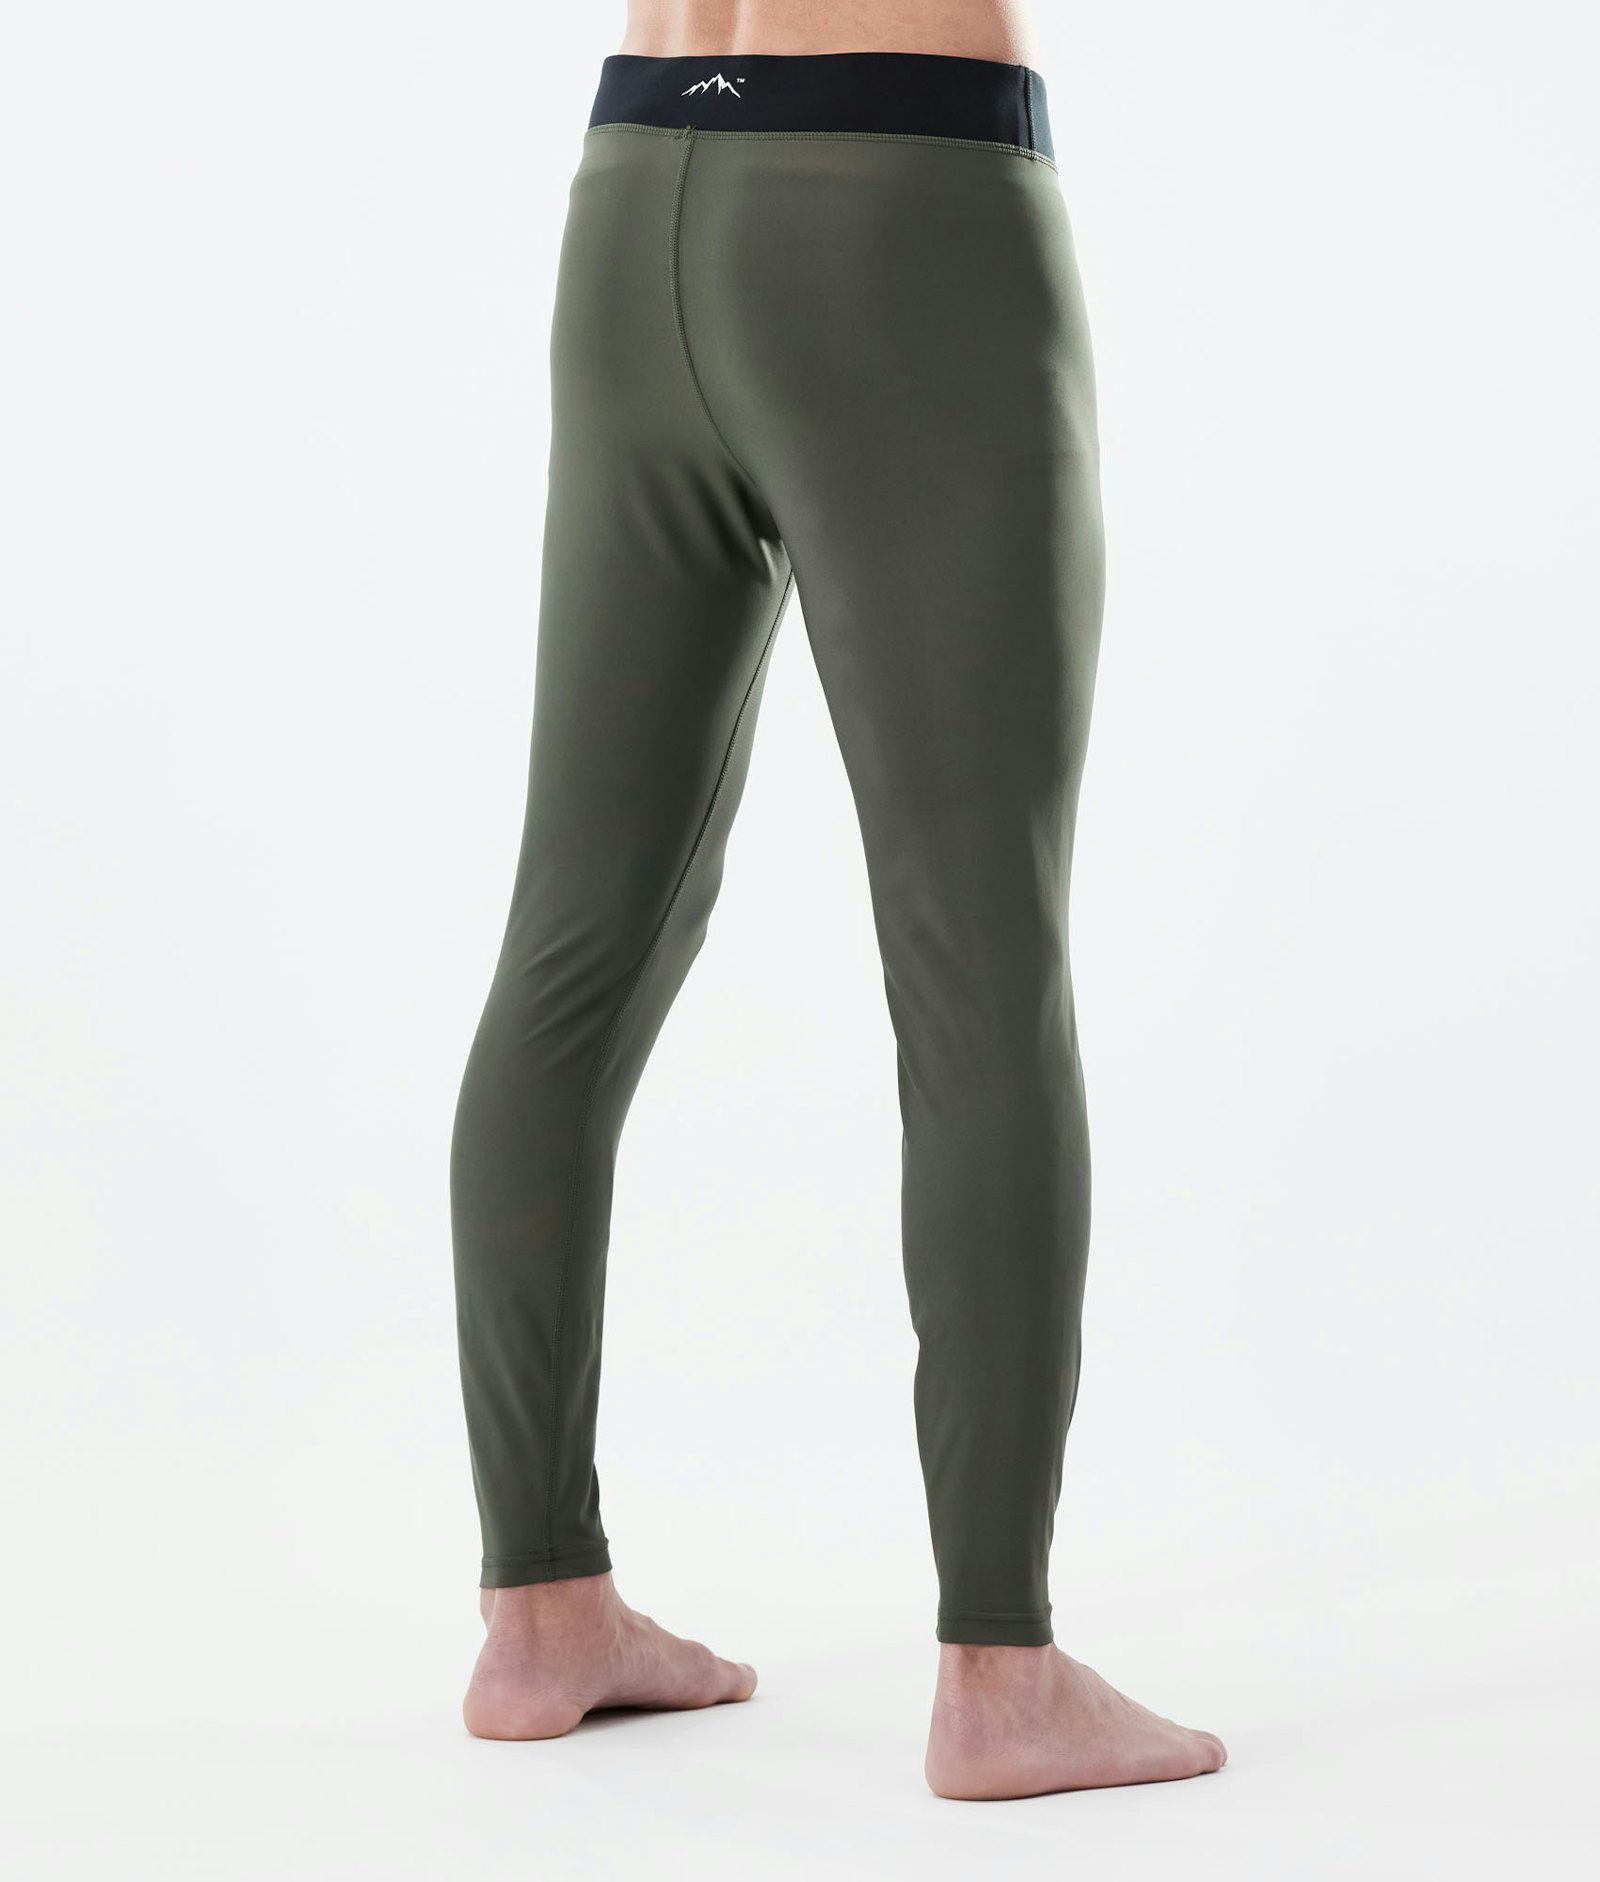 Snuggle Base Layer Pant Men 2X-Up Olive Green